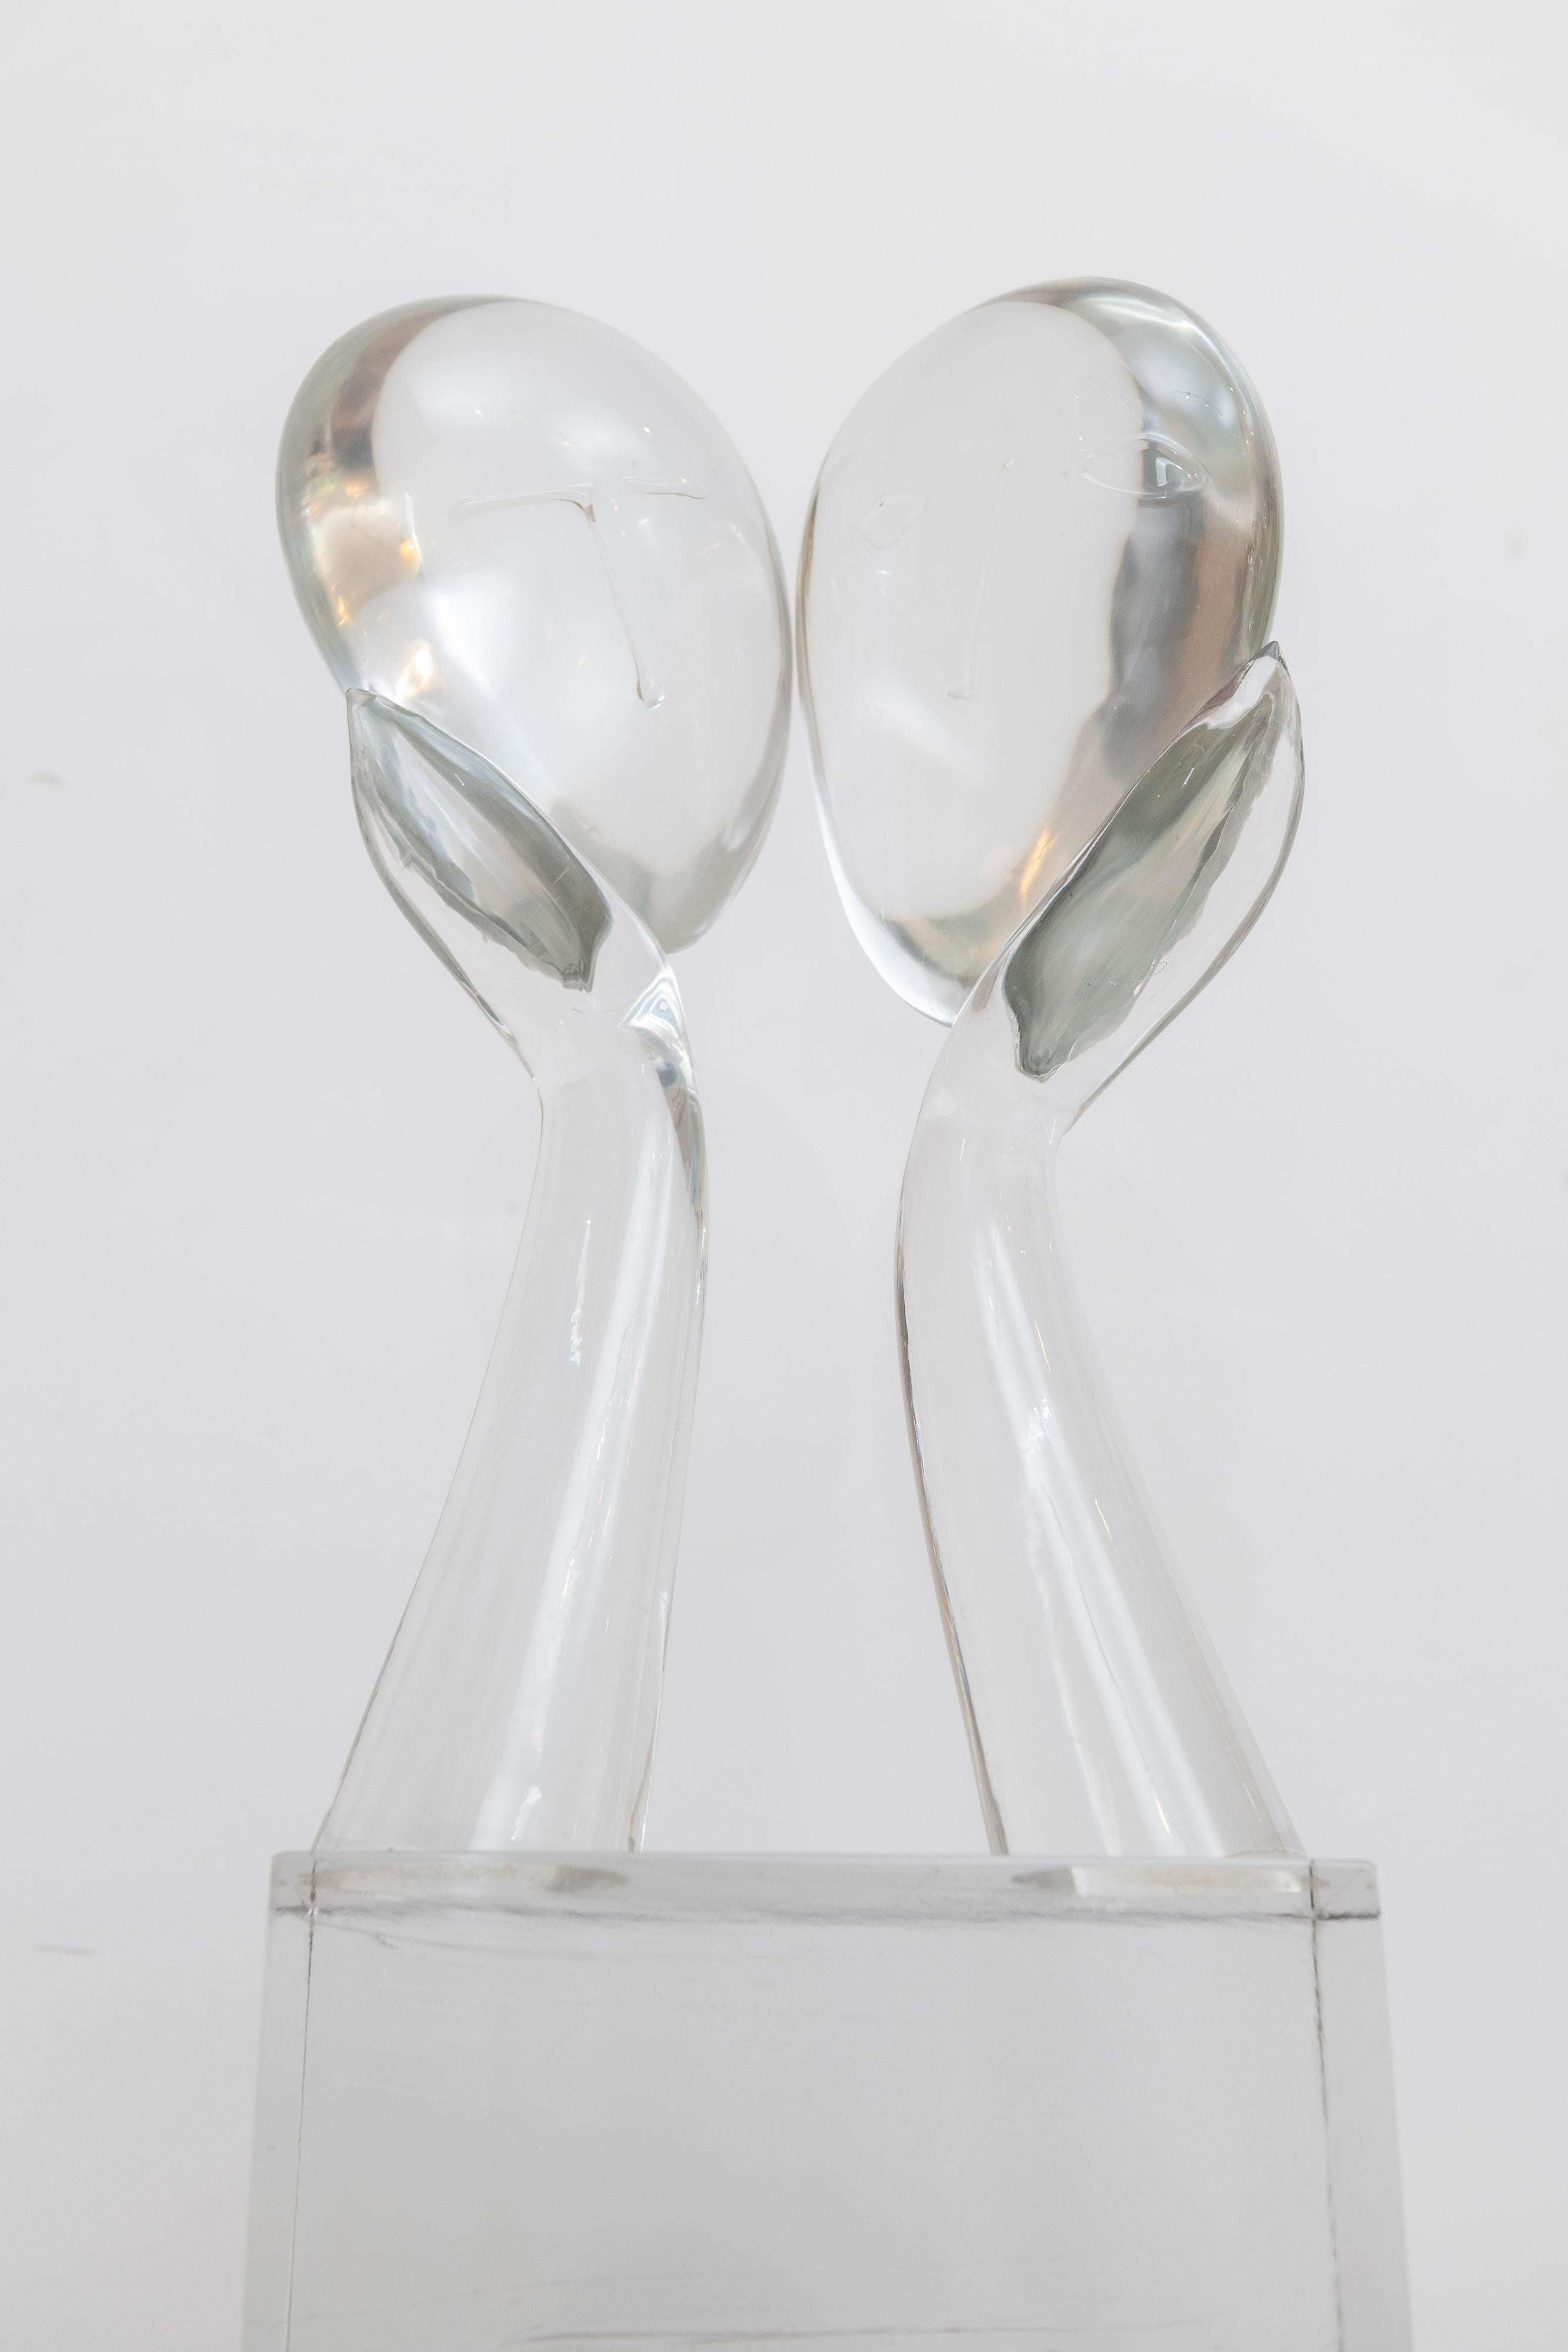 Loredano Rosin Glass Sculpture 'Two Faces' For Sale 4